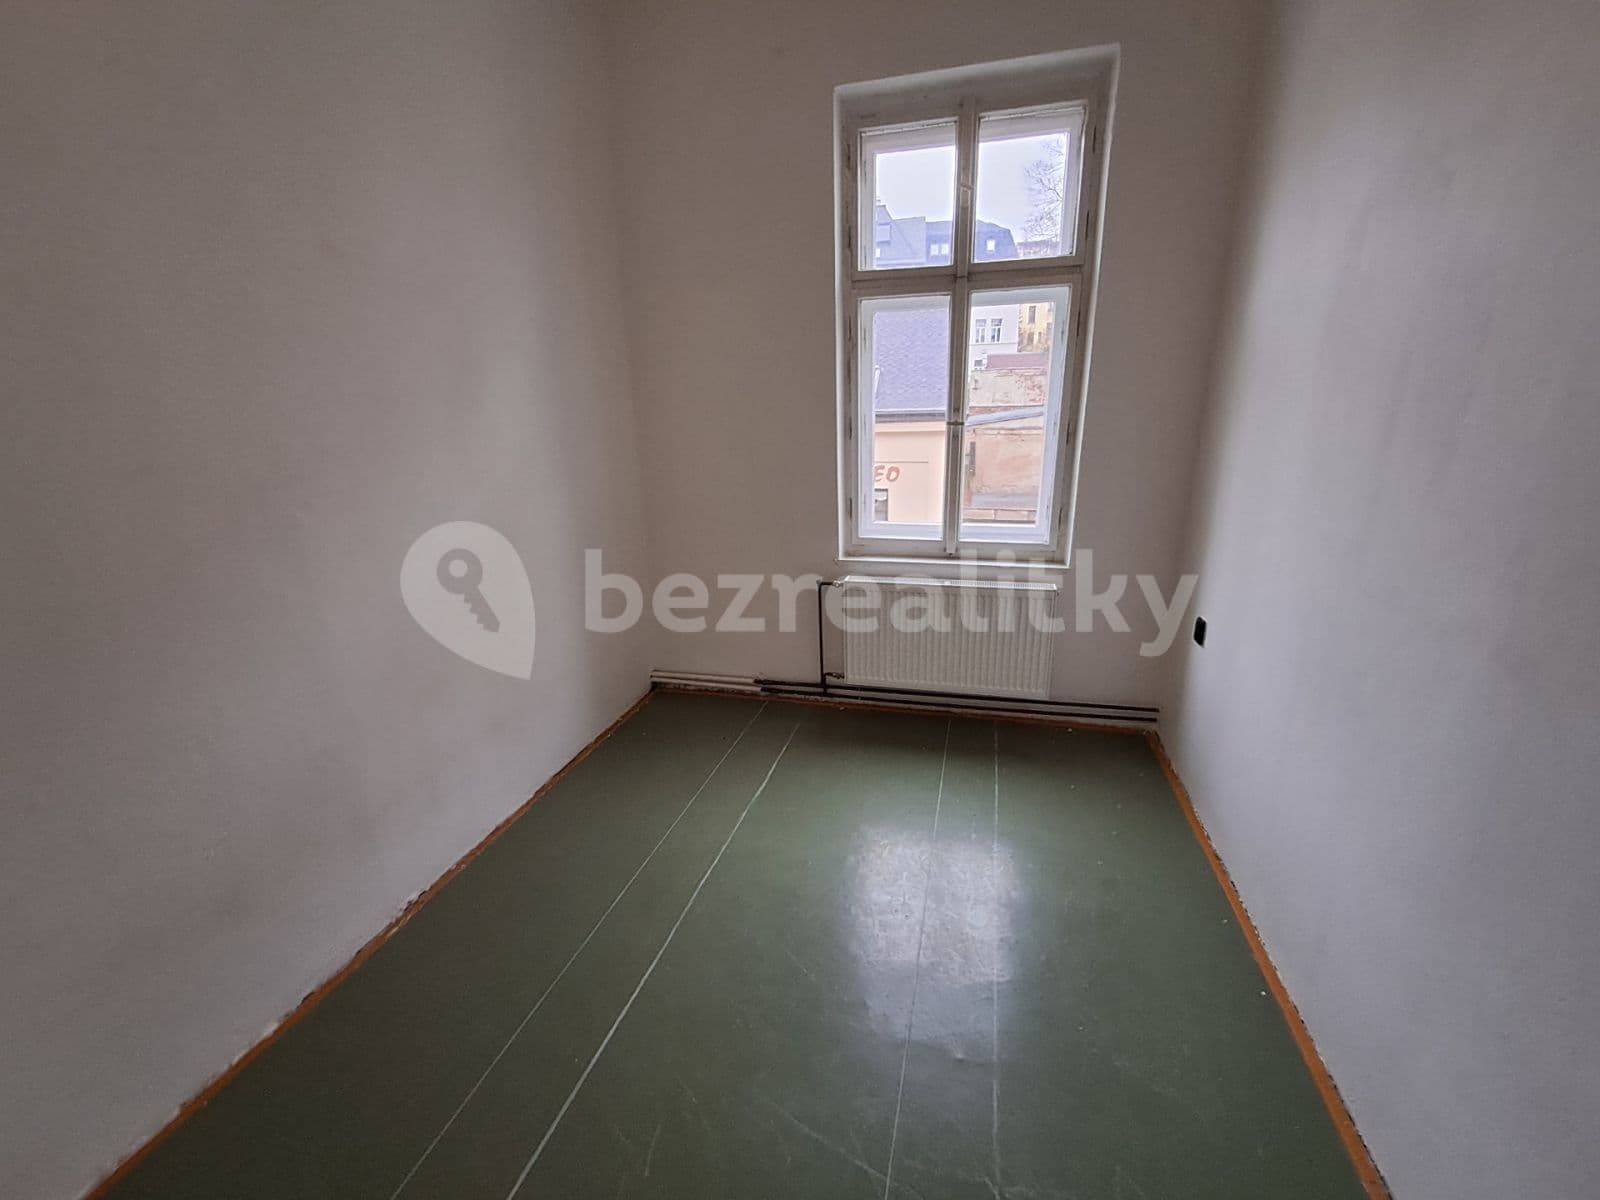 Predaj bytu 3-izbový 91 m², Liberecká, Jablonec nad Nisou, Liberecký kraj